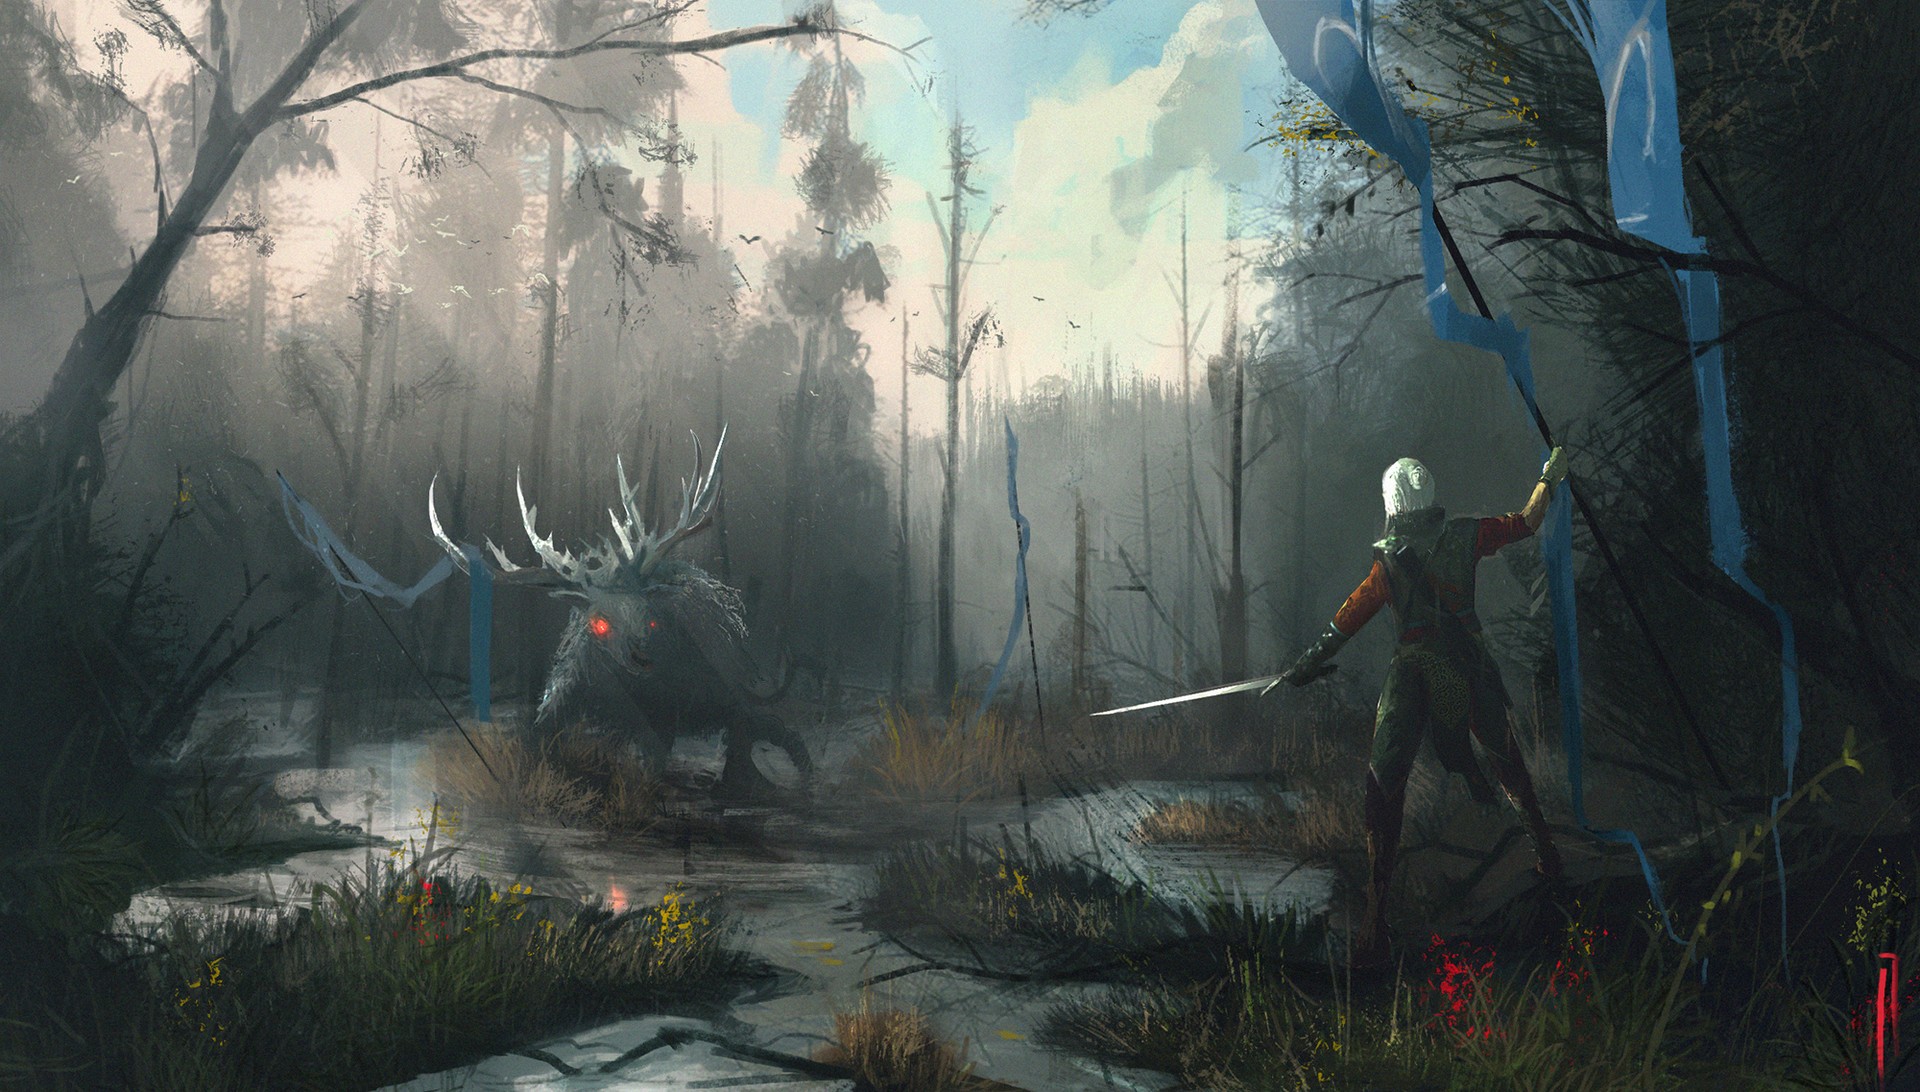 Cirilla Fiona Elen Riannon, The Witcher 3: Wild Hunt, Digital art Wallpaper